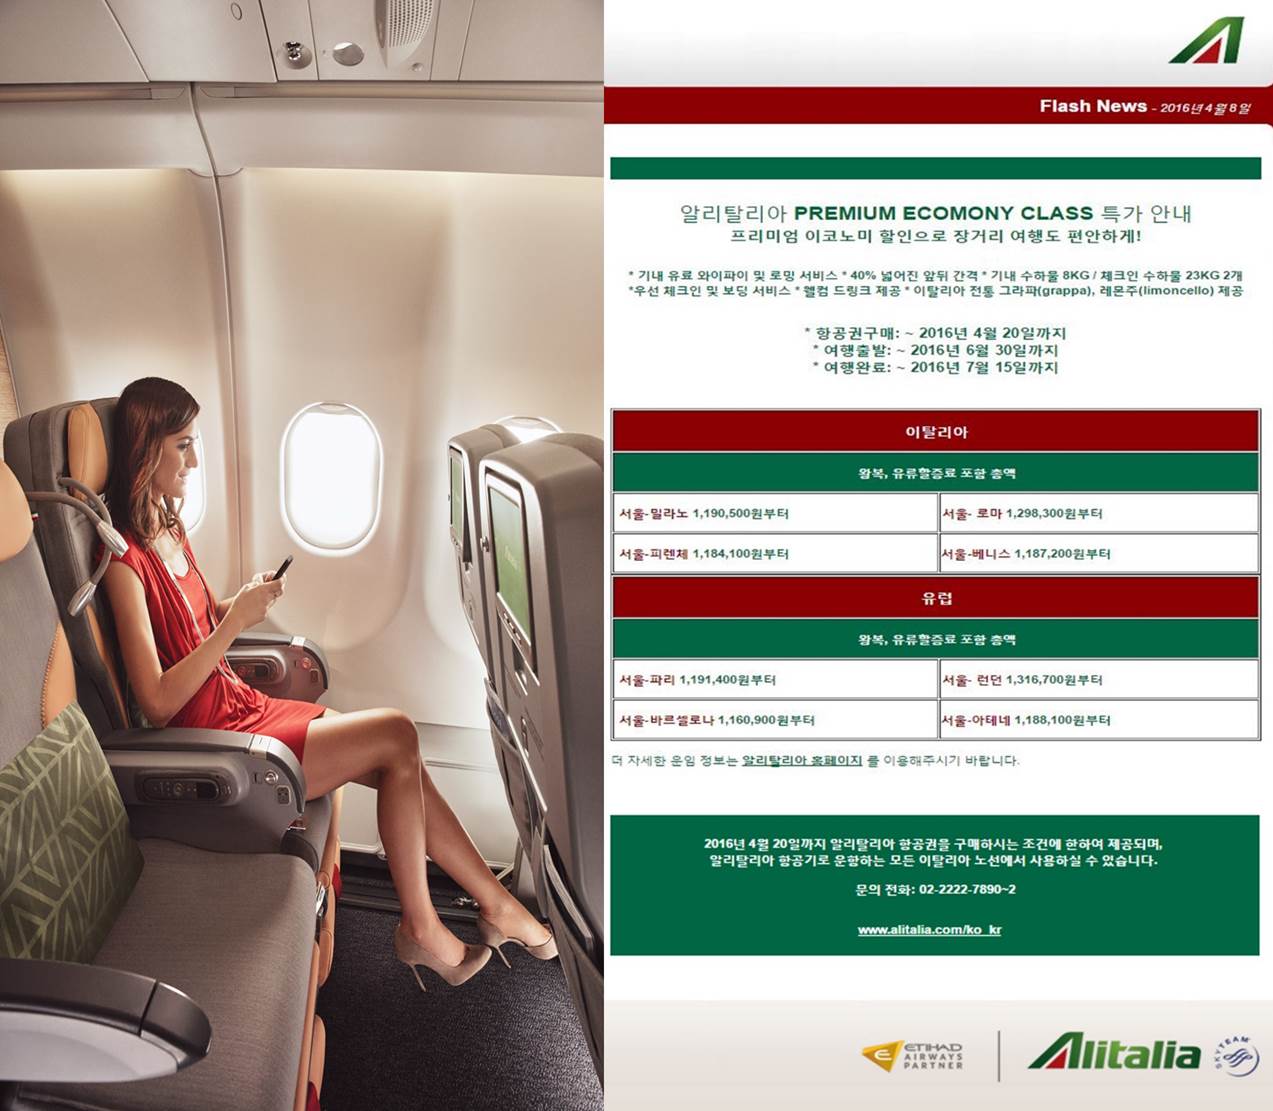 Alitalia - Comfortable Premium Economy Promotion